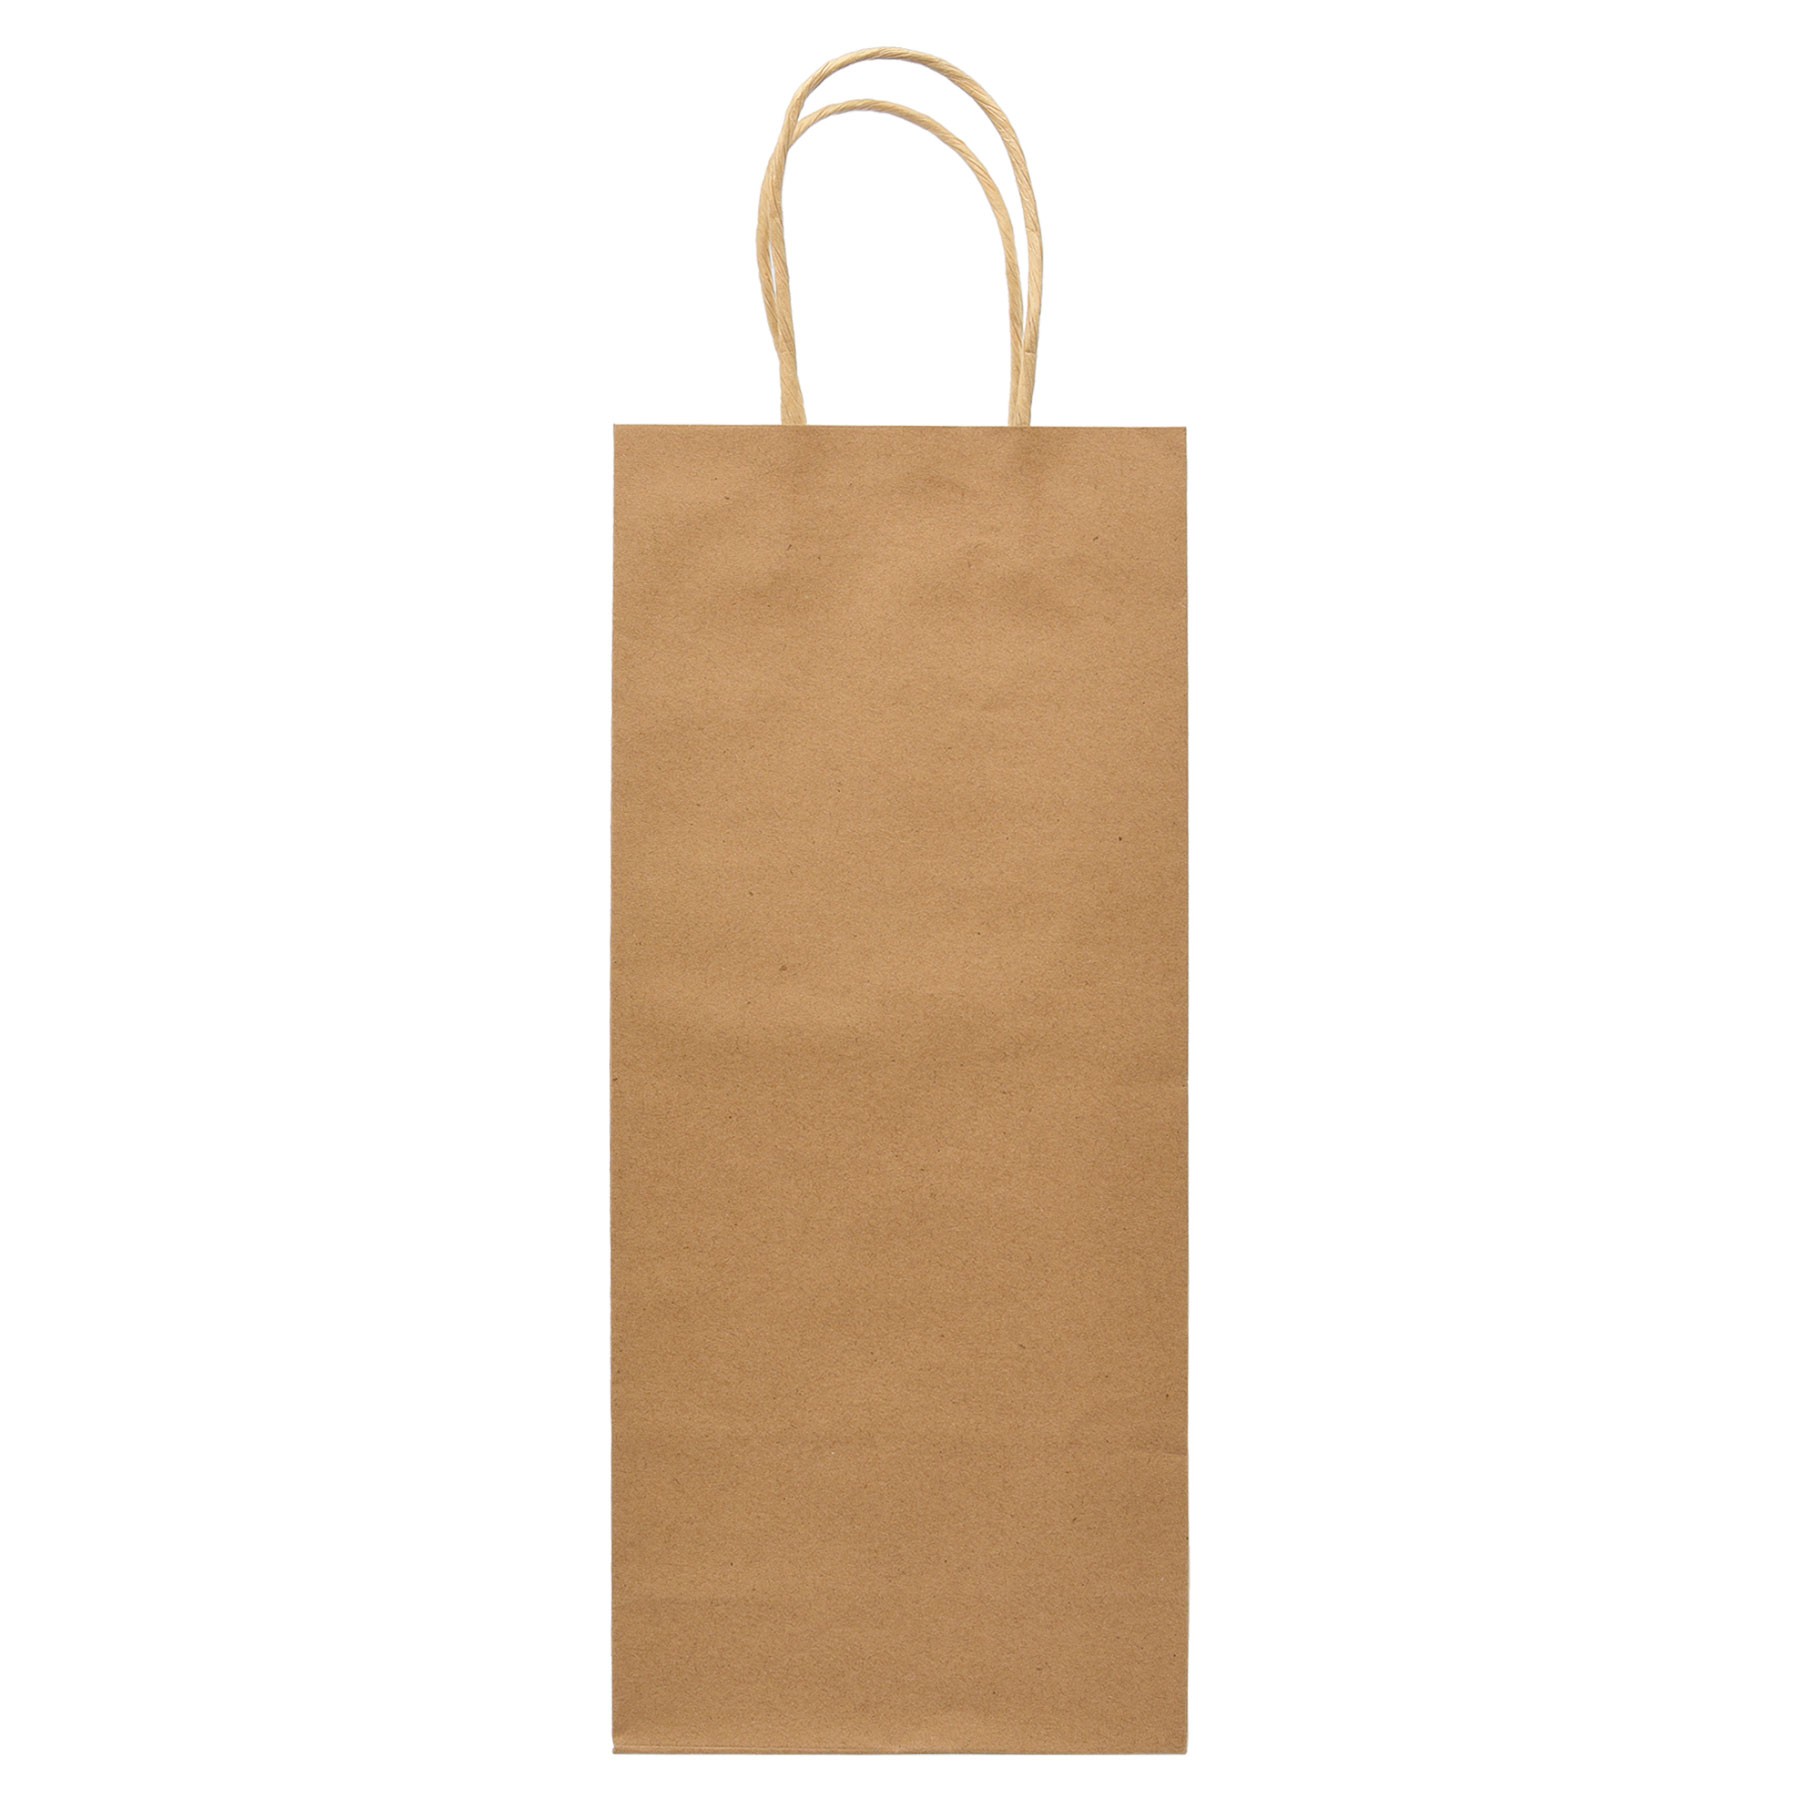 Kraft Paper Bag for Wine Bottles - 5.5"w x 13"h - 100/carton